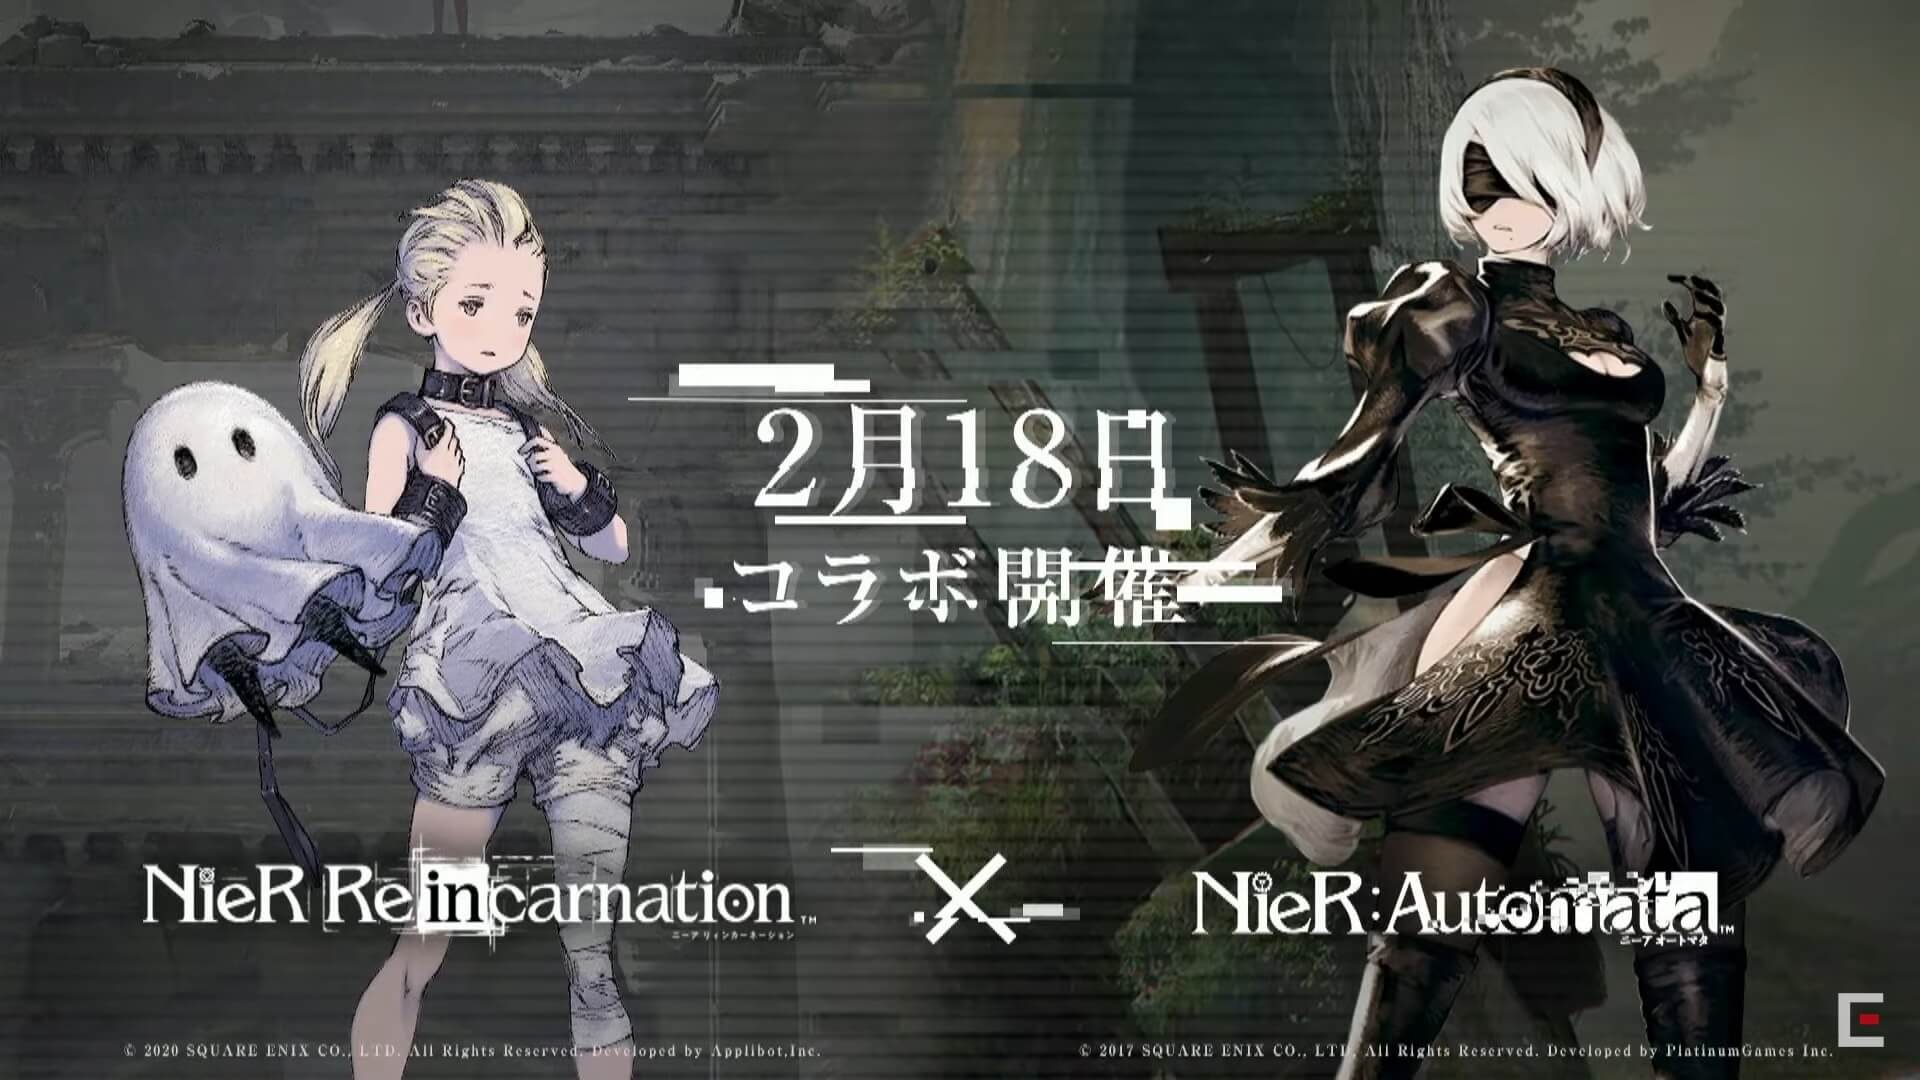 Nier: Automata' Anime Series Announced By Square Enix